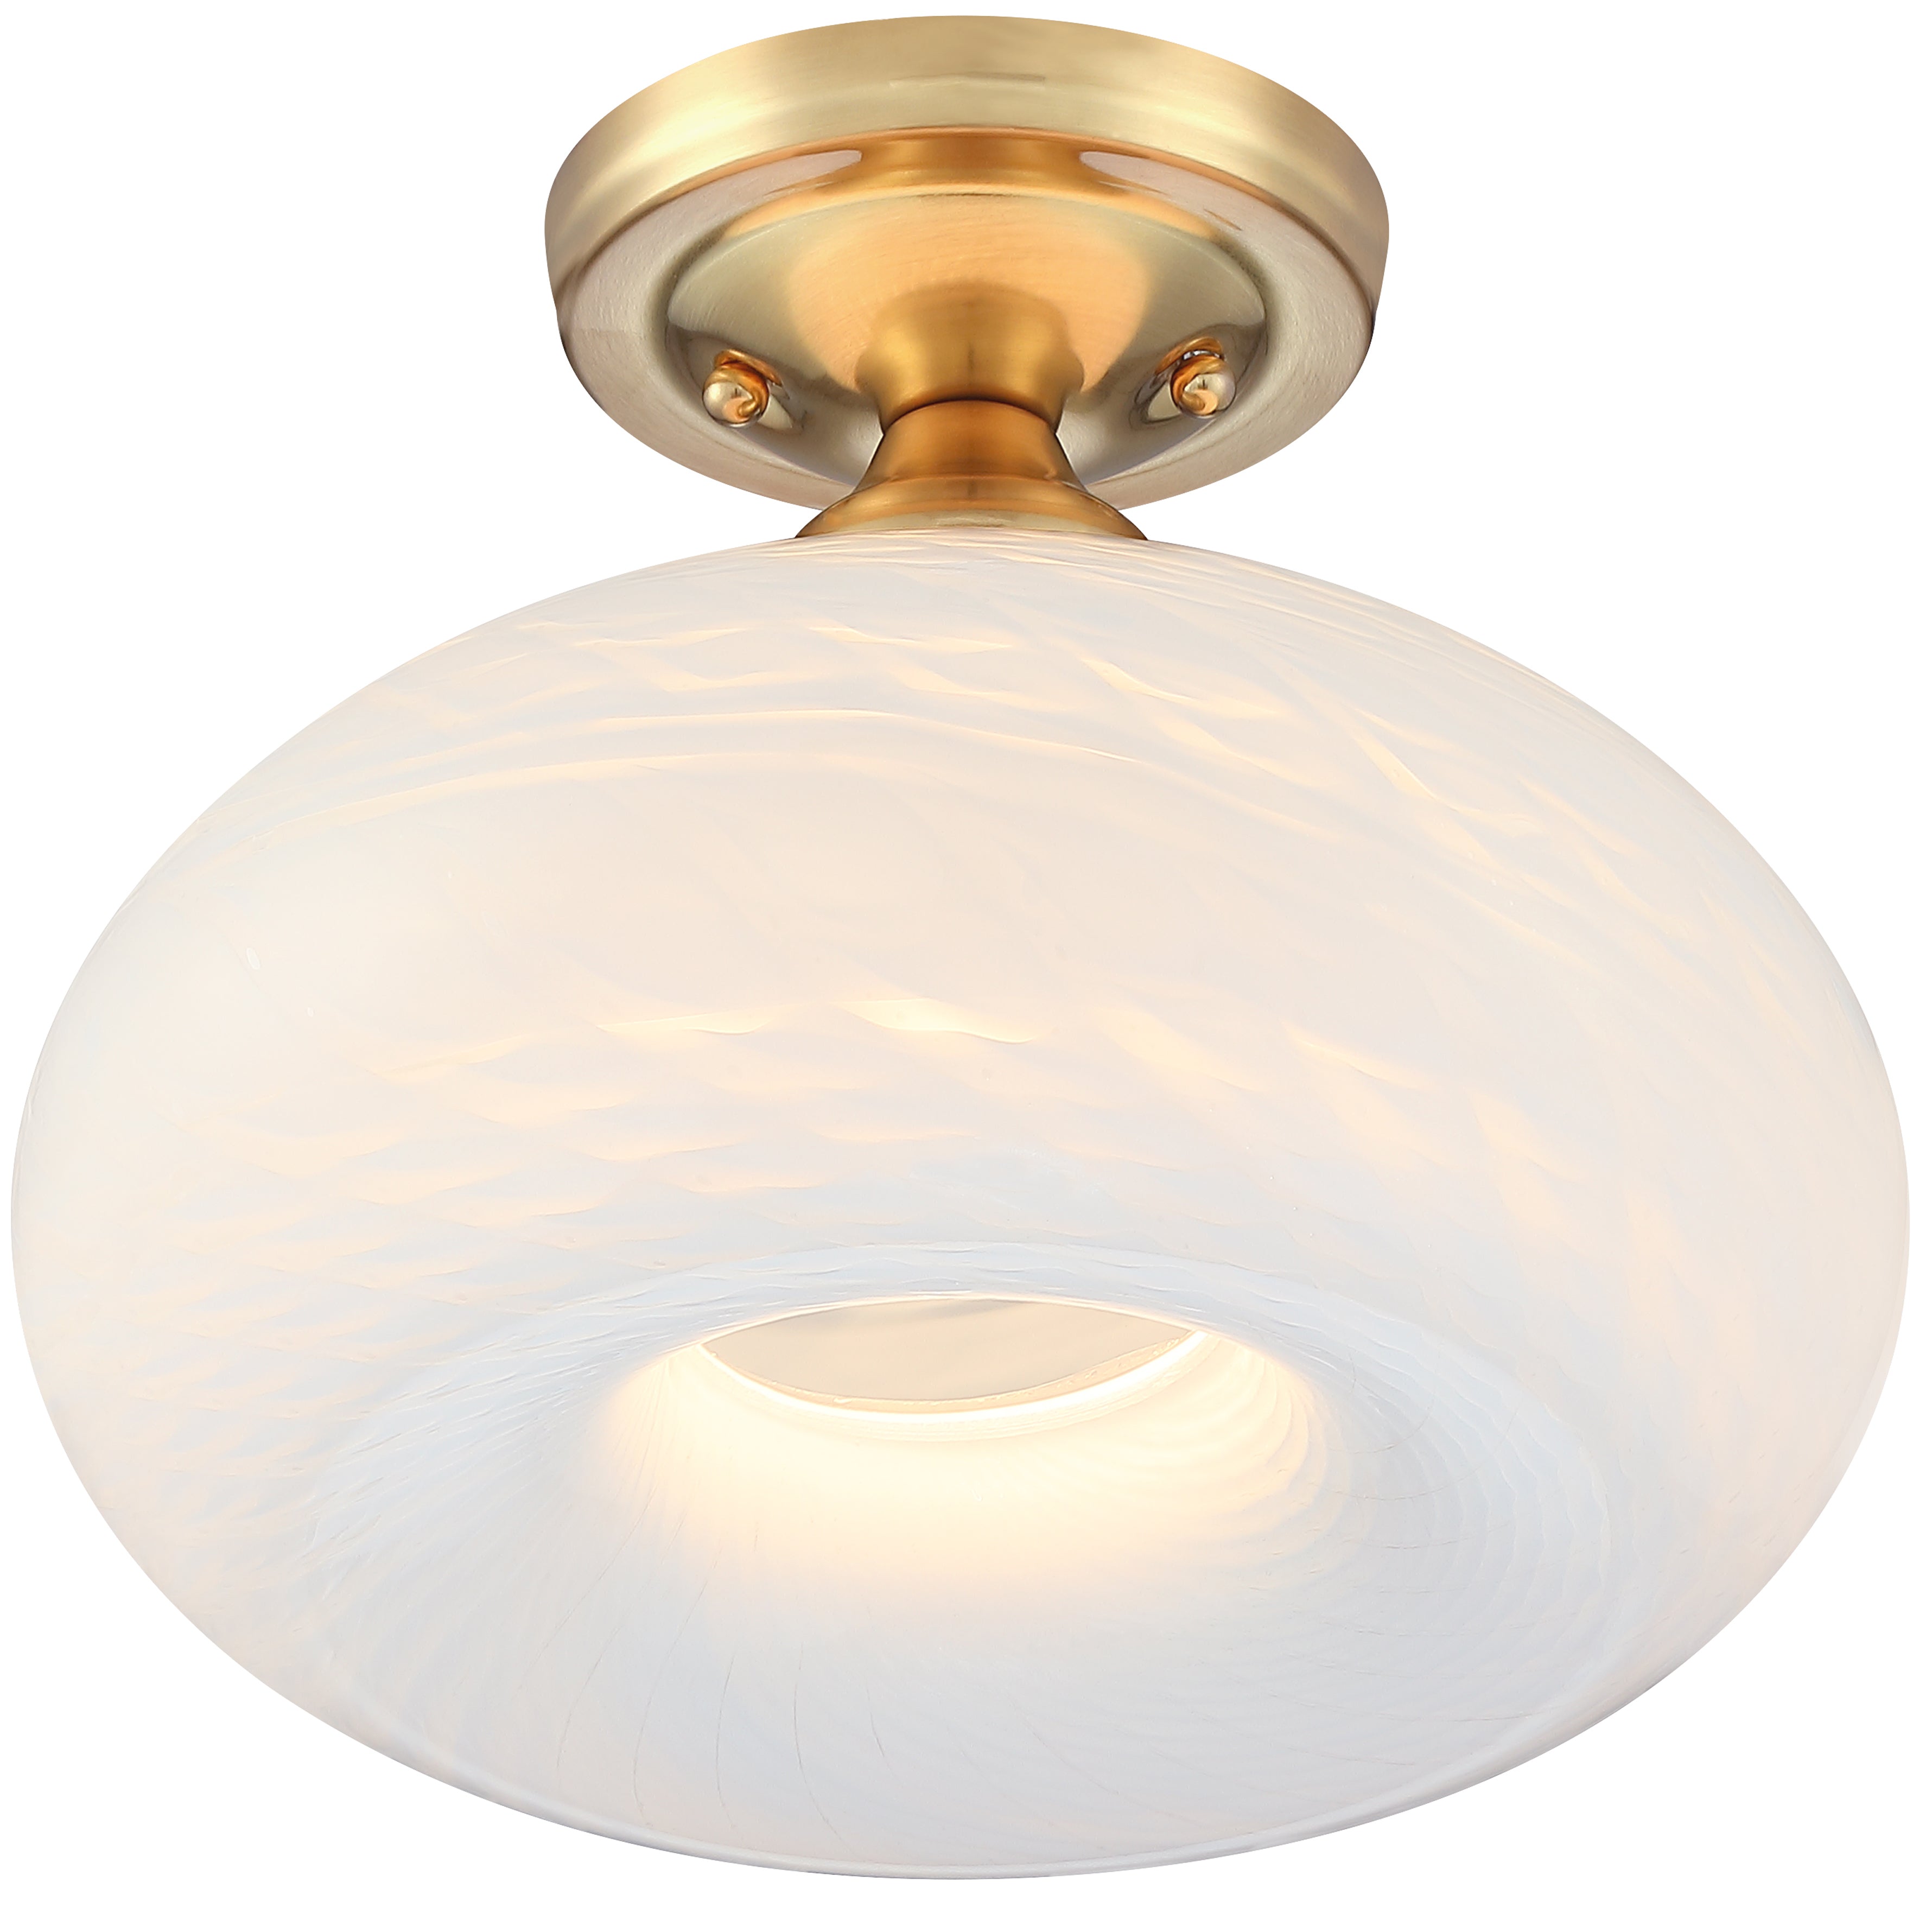 1 Light Matte Brass Industrial Semi Flush Mount Ceiling Light Withe Shade